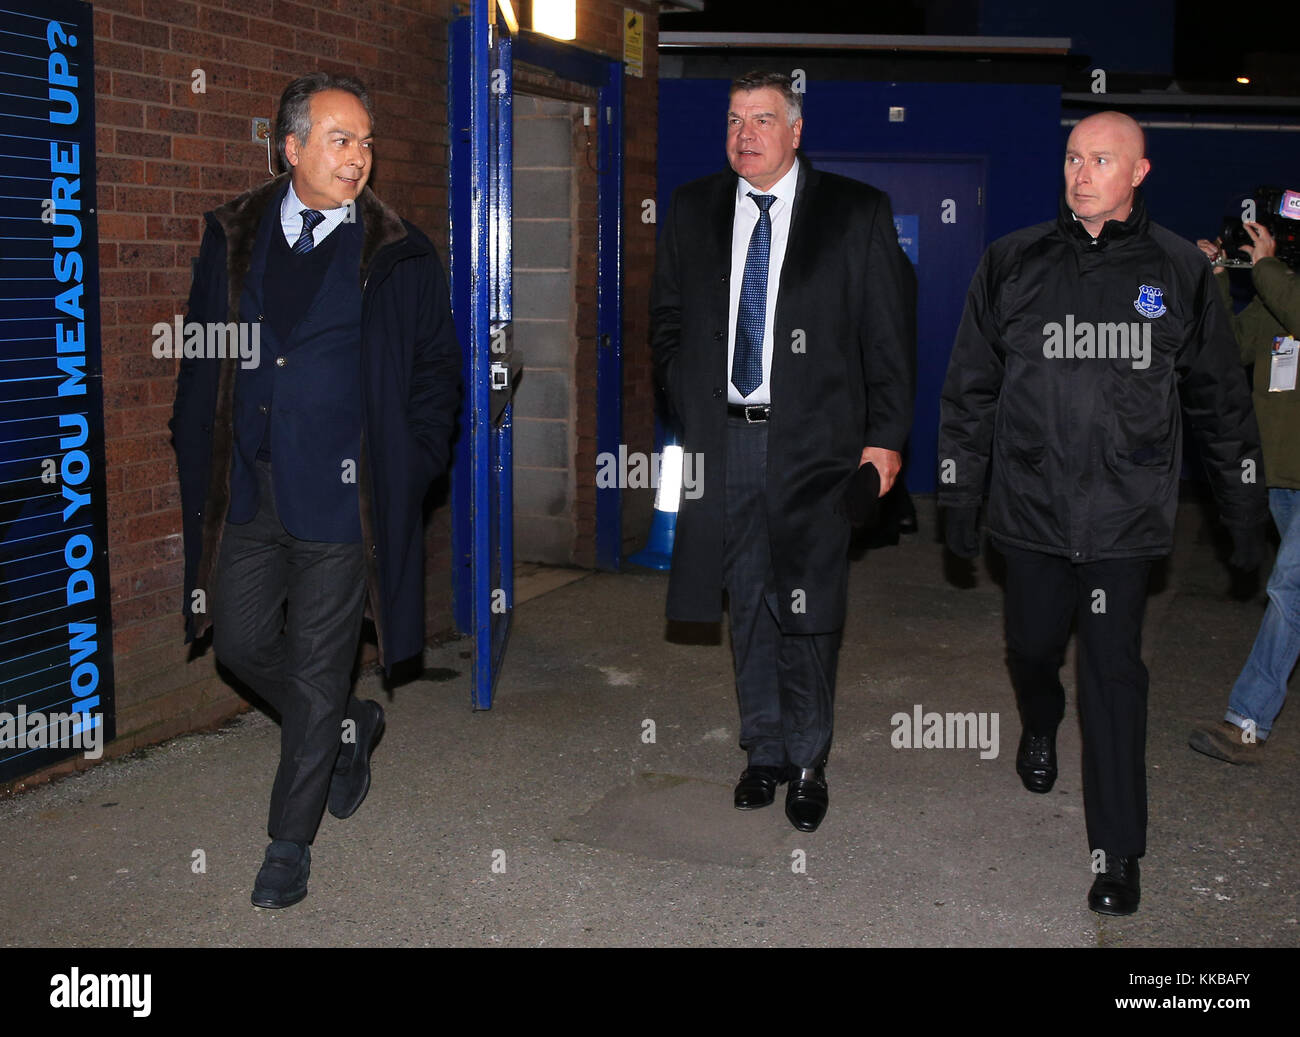 Sam Allardyce arrives at Goodison Park, Liverpool with Owner Farhad Moshiri (left). Stock Photo